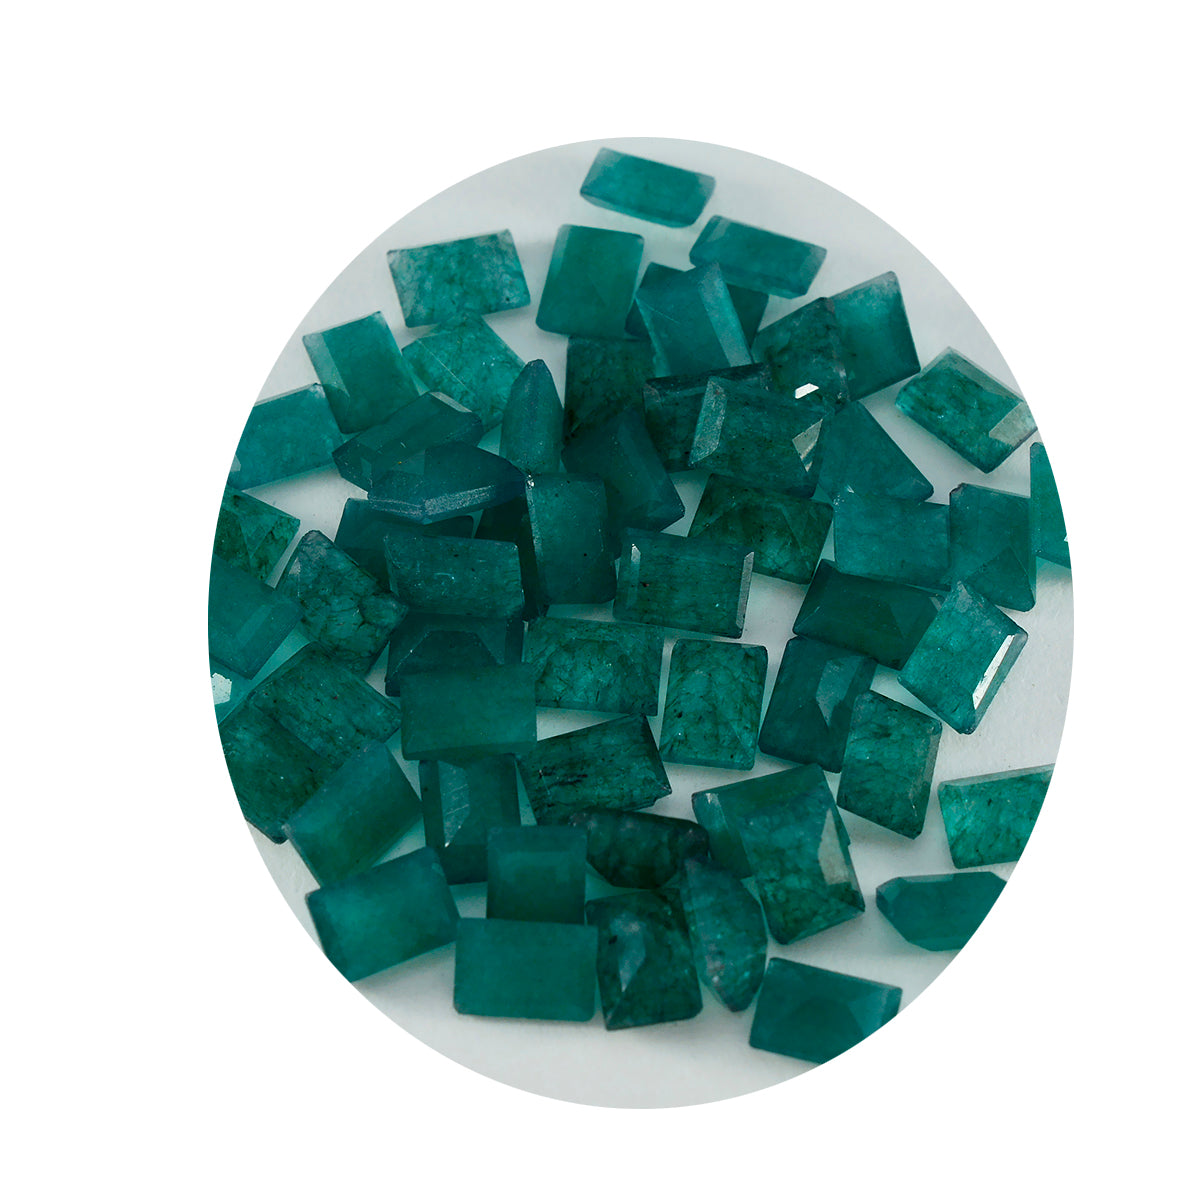 riyogems 1pc ナチュラル グリーン ジャスパー ファセット 6x8 mm 八角形のハンサムな品質の石